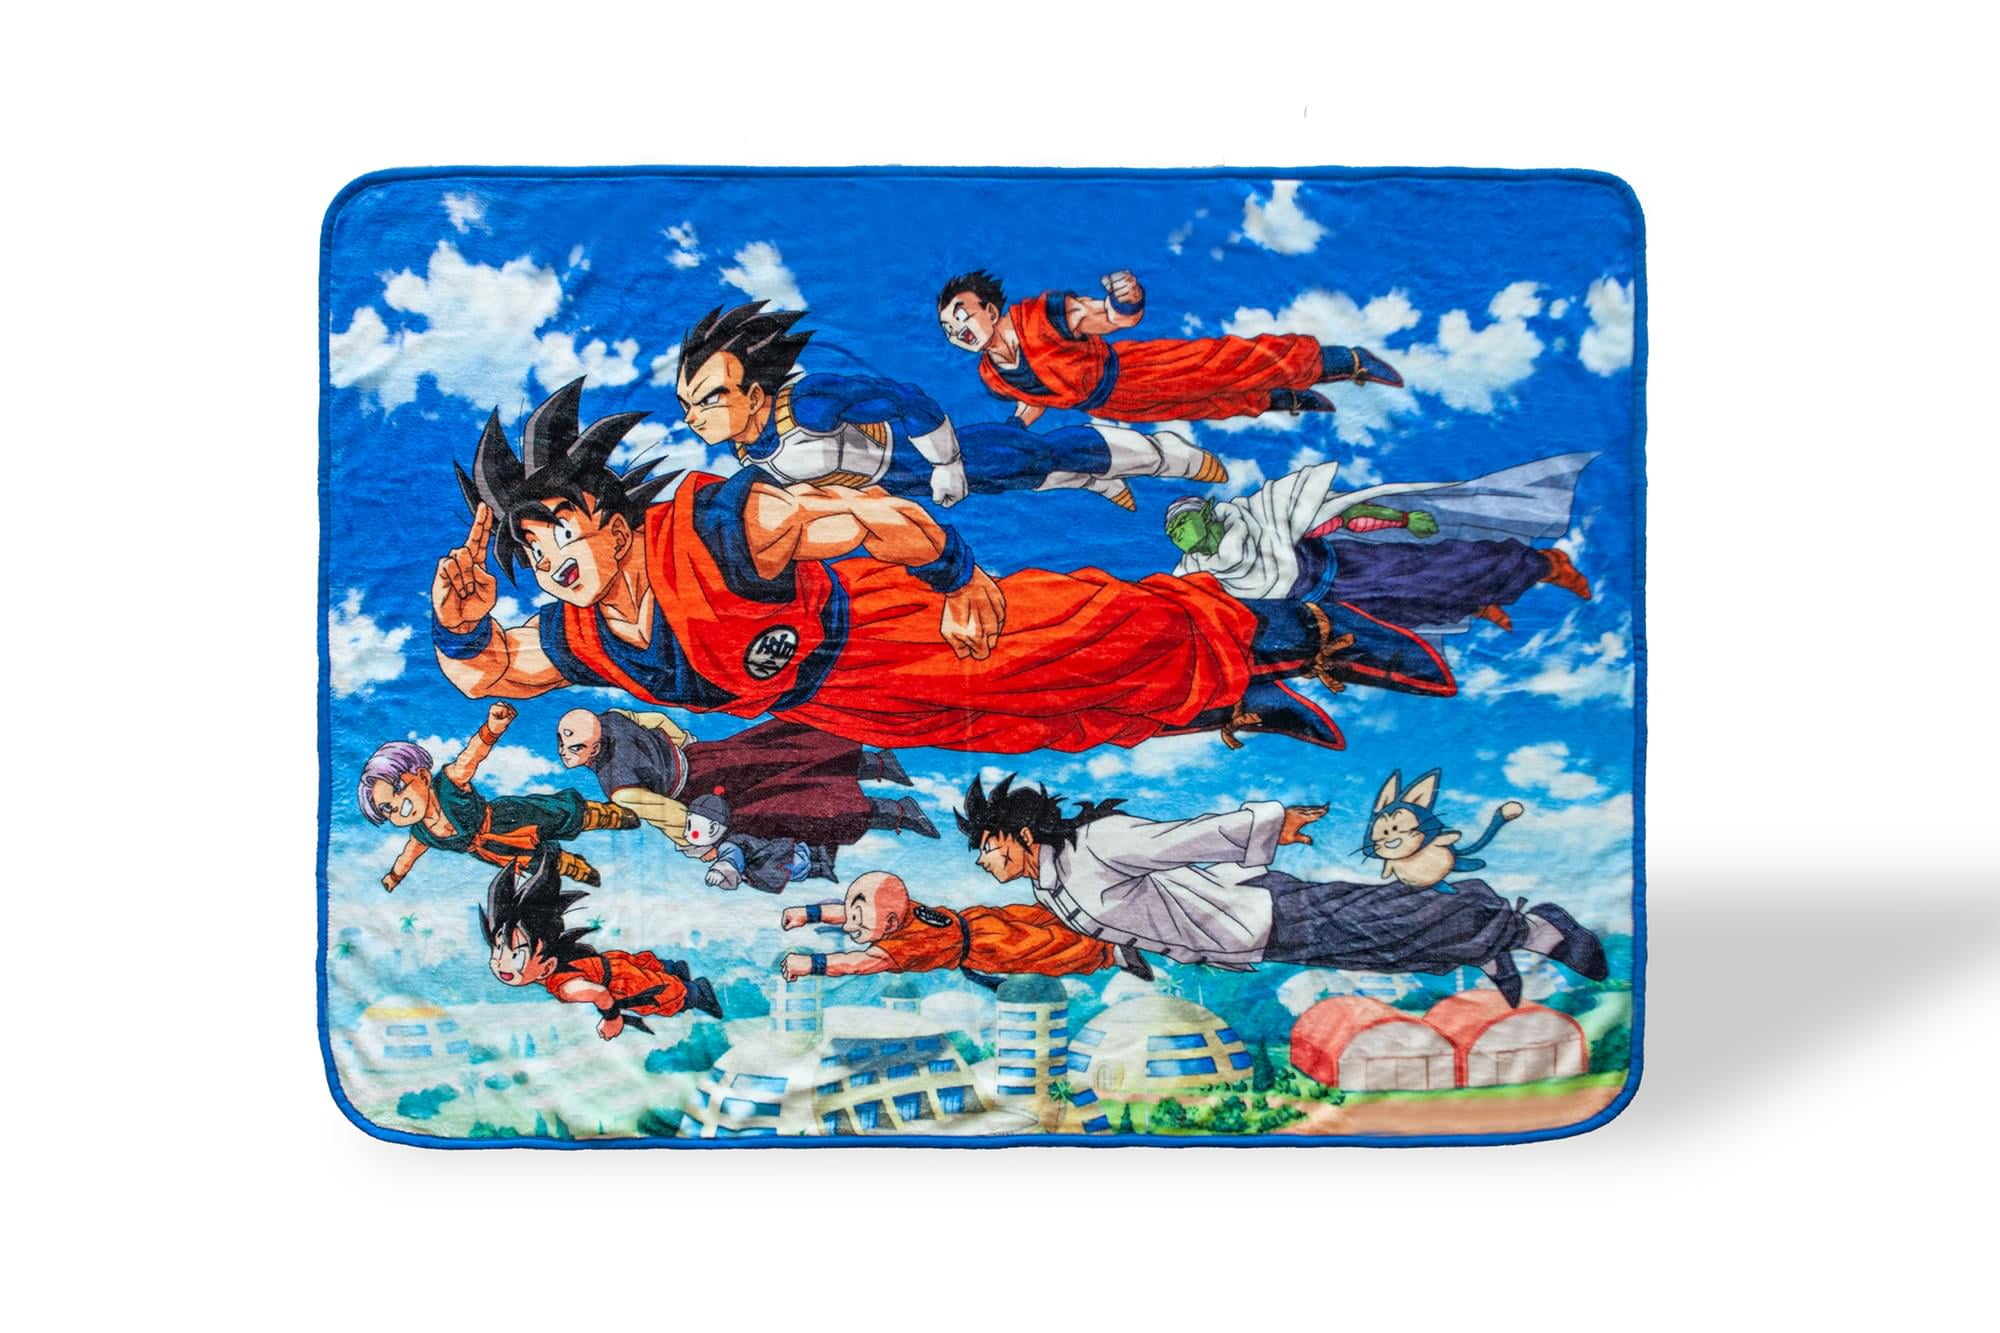 Dragon Ball Z Blanket Featuring Goku and his Super Saiyan Form 45 x 60 inches Fleece 